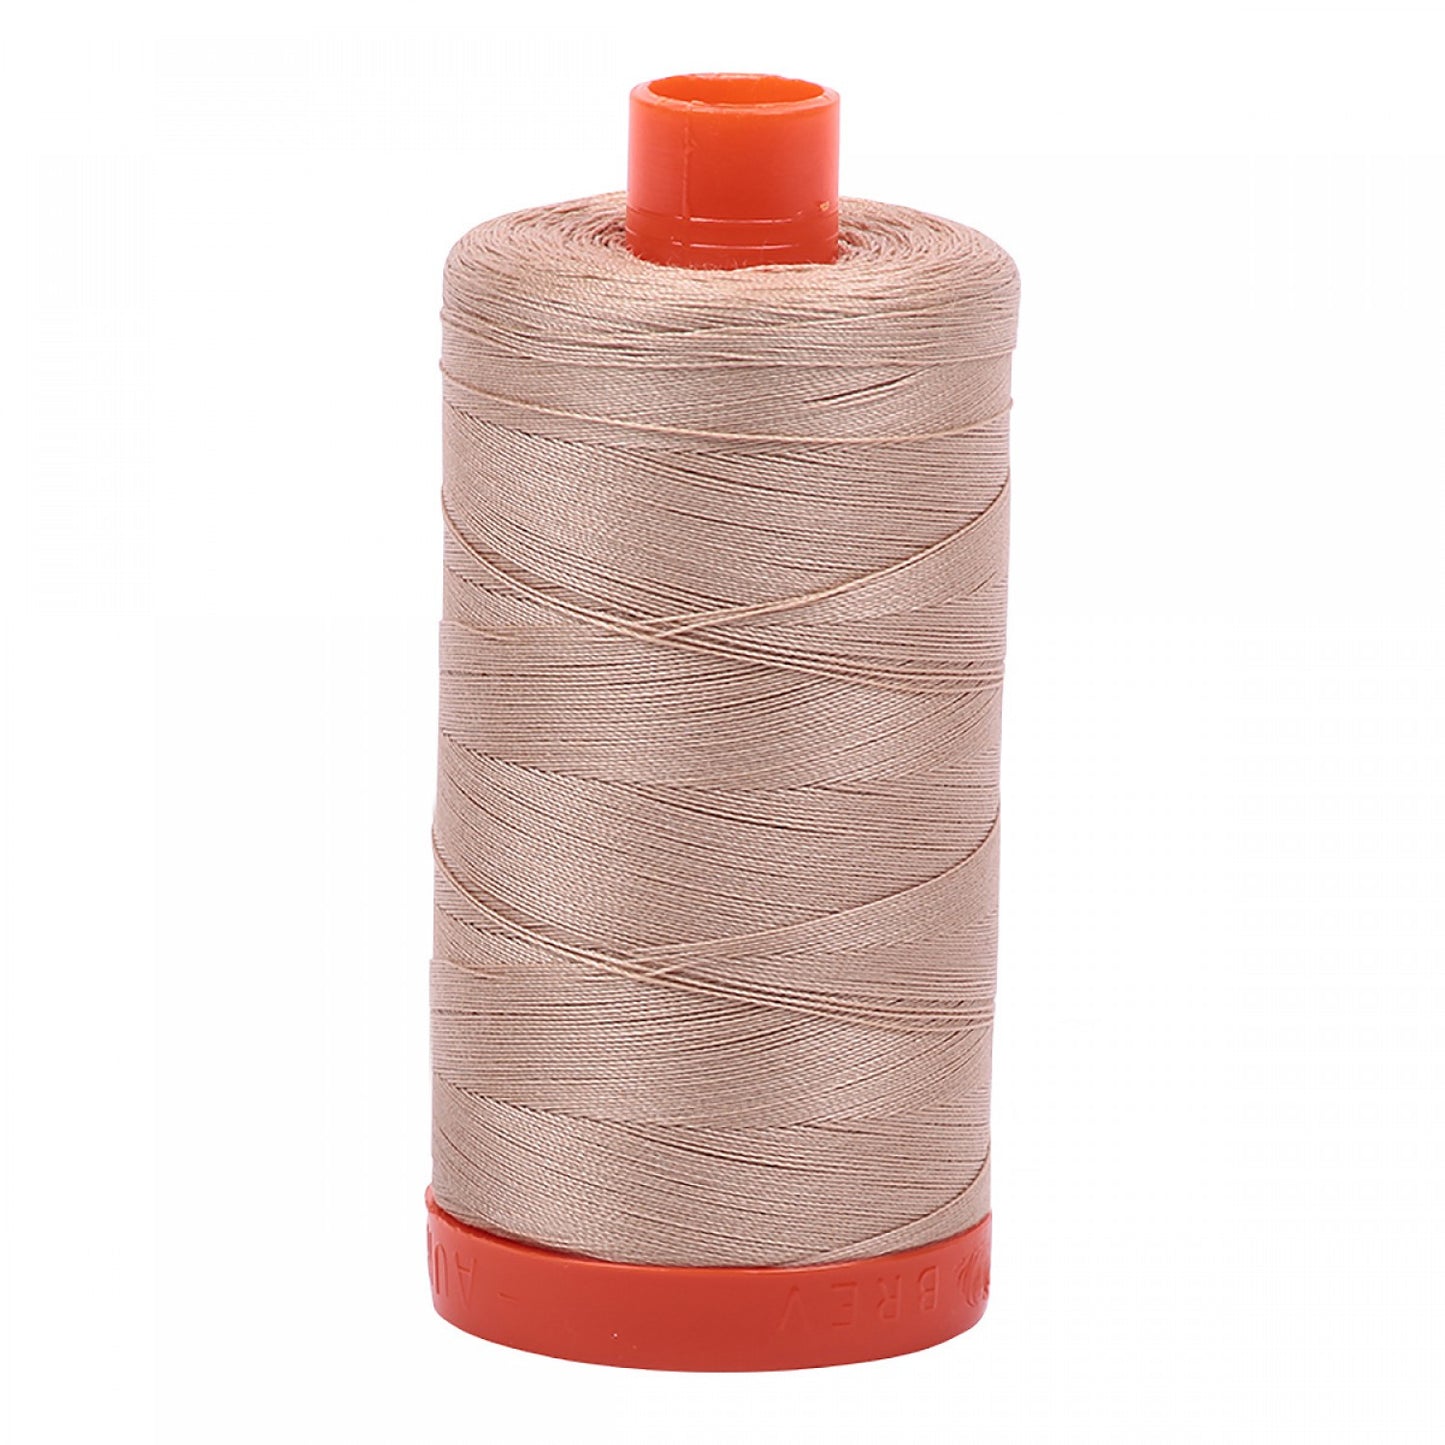 Mako Cotton Thread Solid 50wt 1422yds